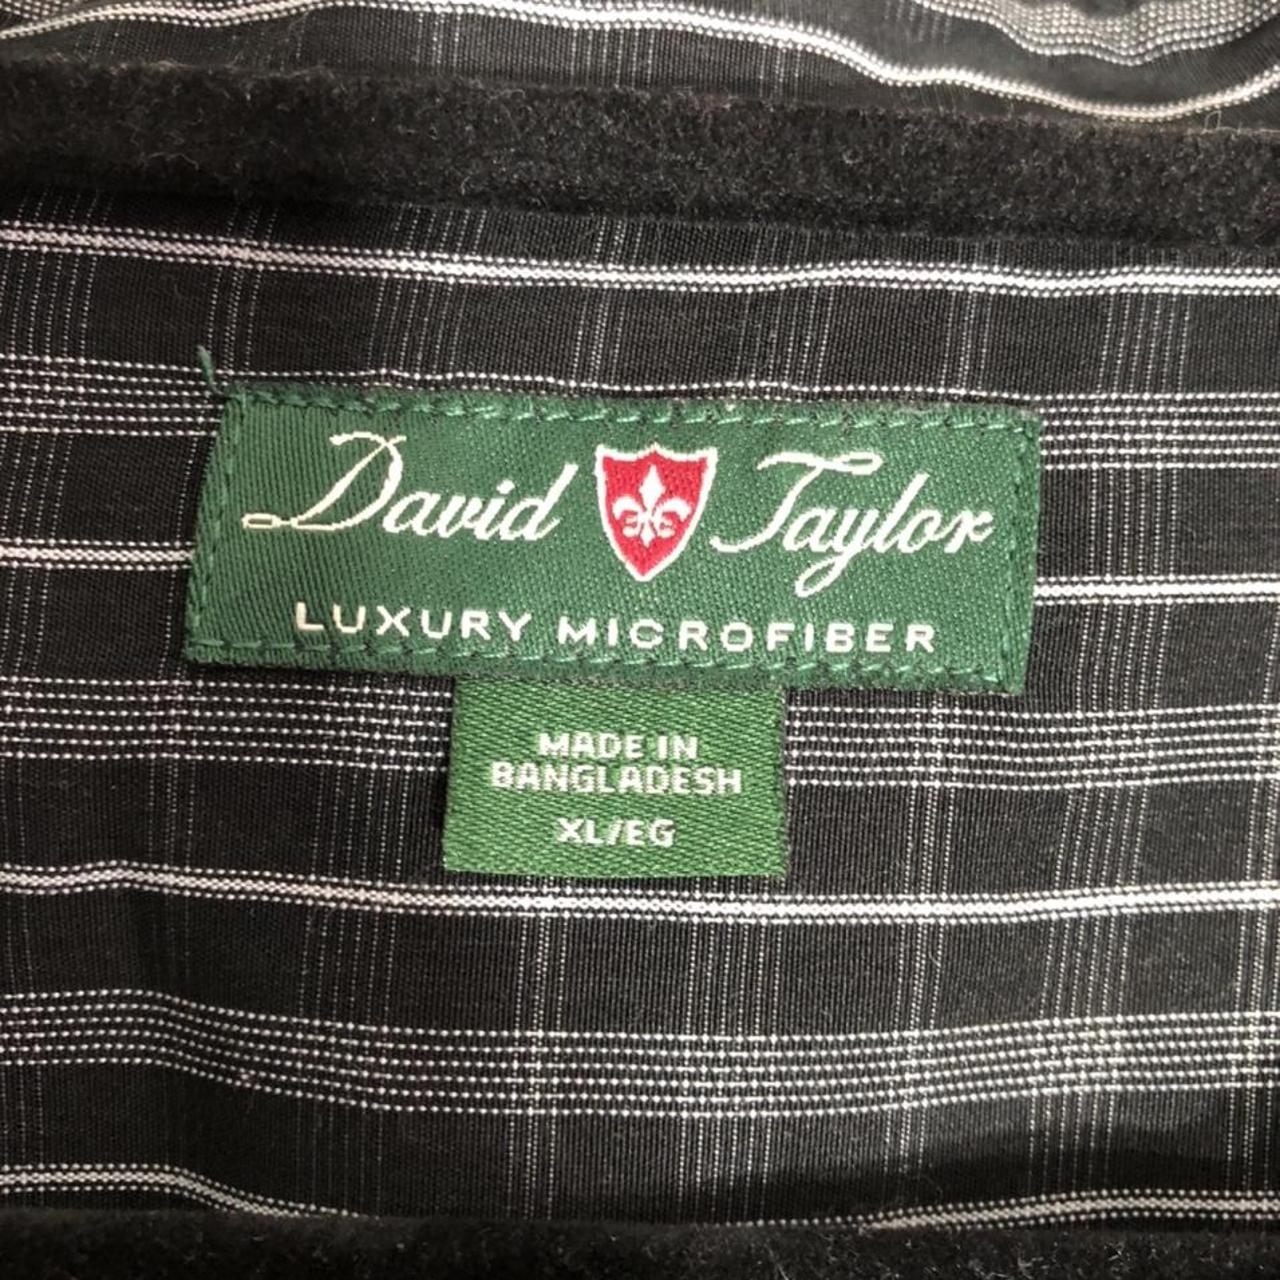 Vintage David Taylor Luxury Microfiber Mens Shirt ... - Depop